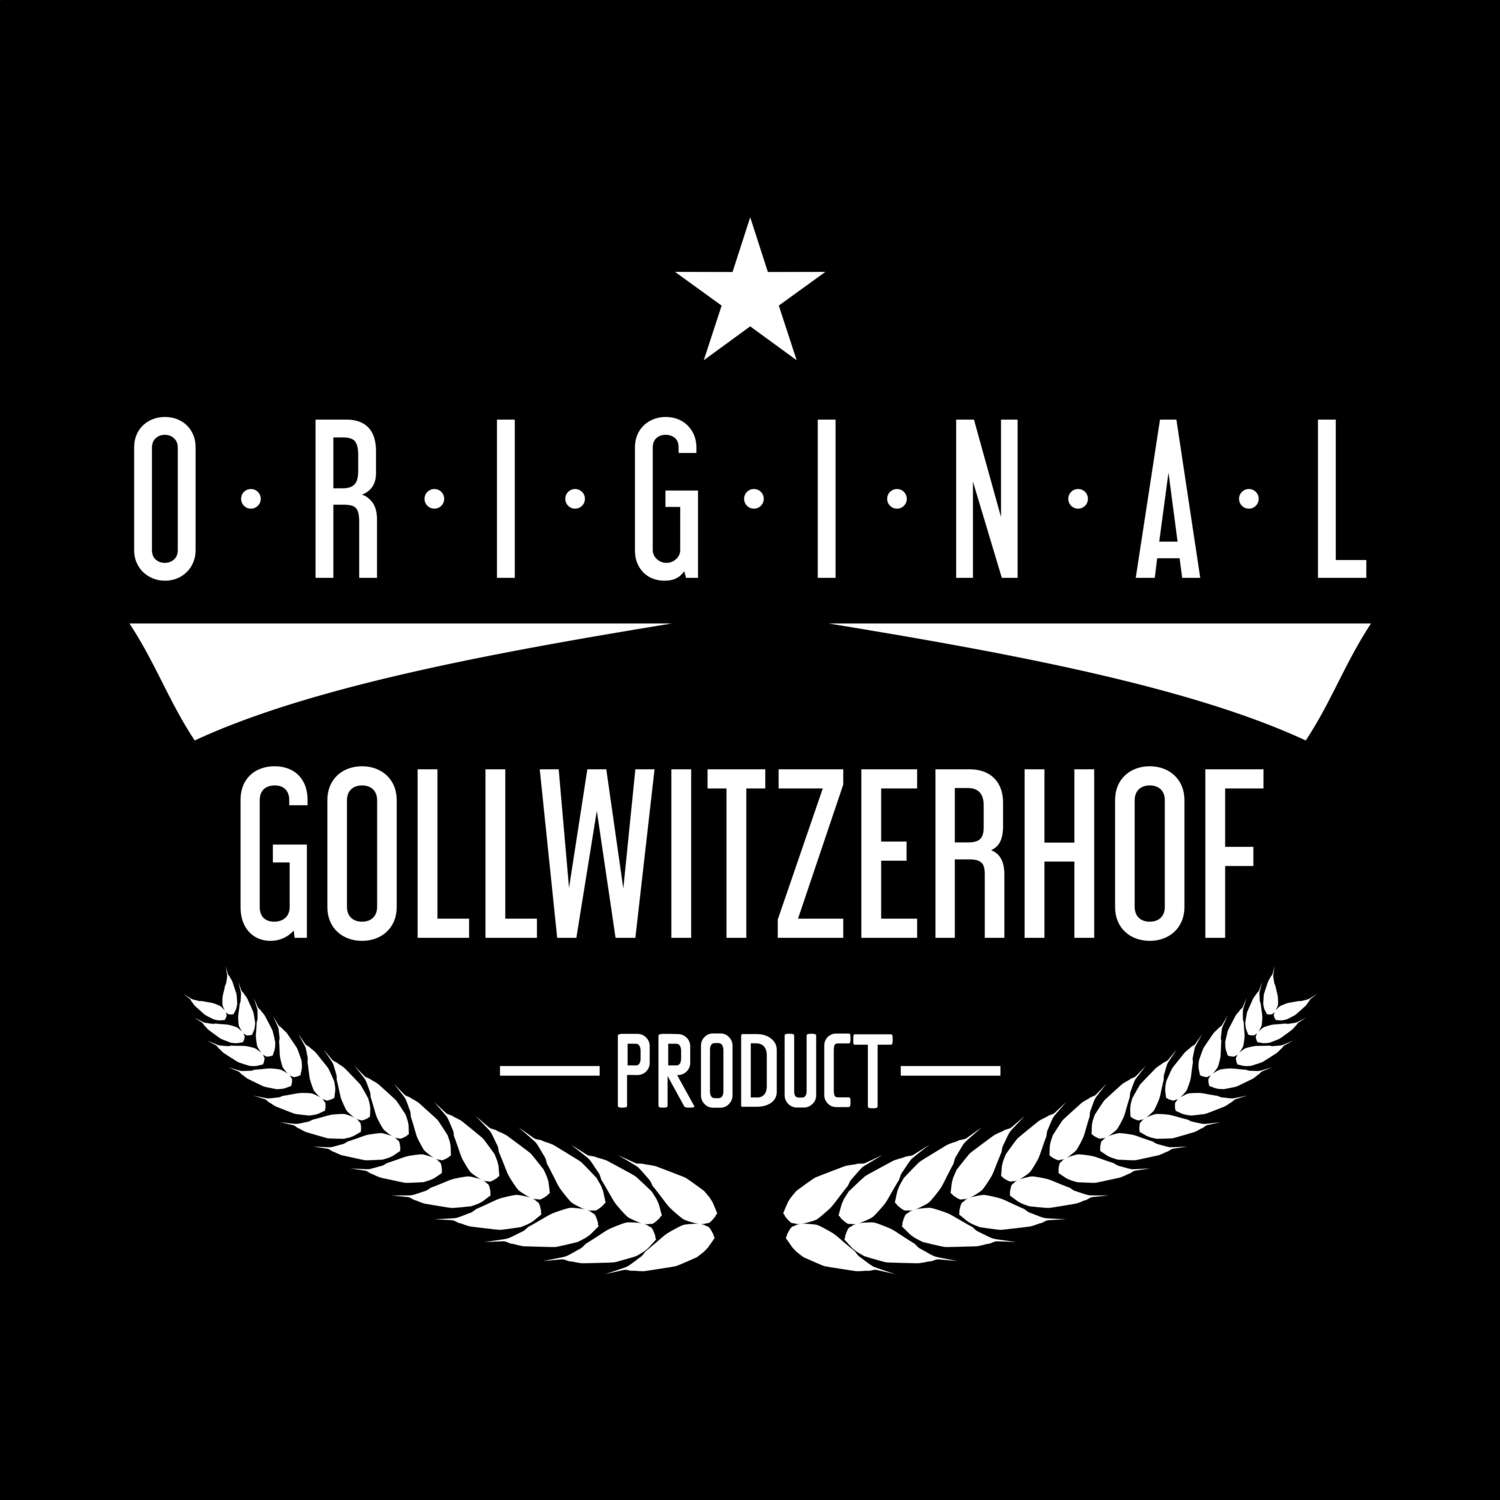 Gollwitzerhof T-Shirt »Original Product«